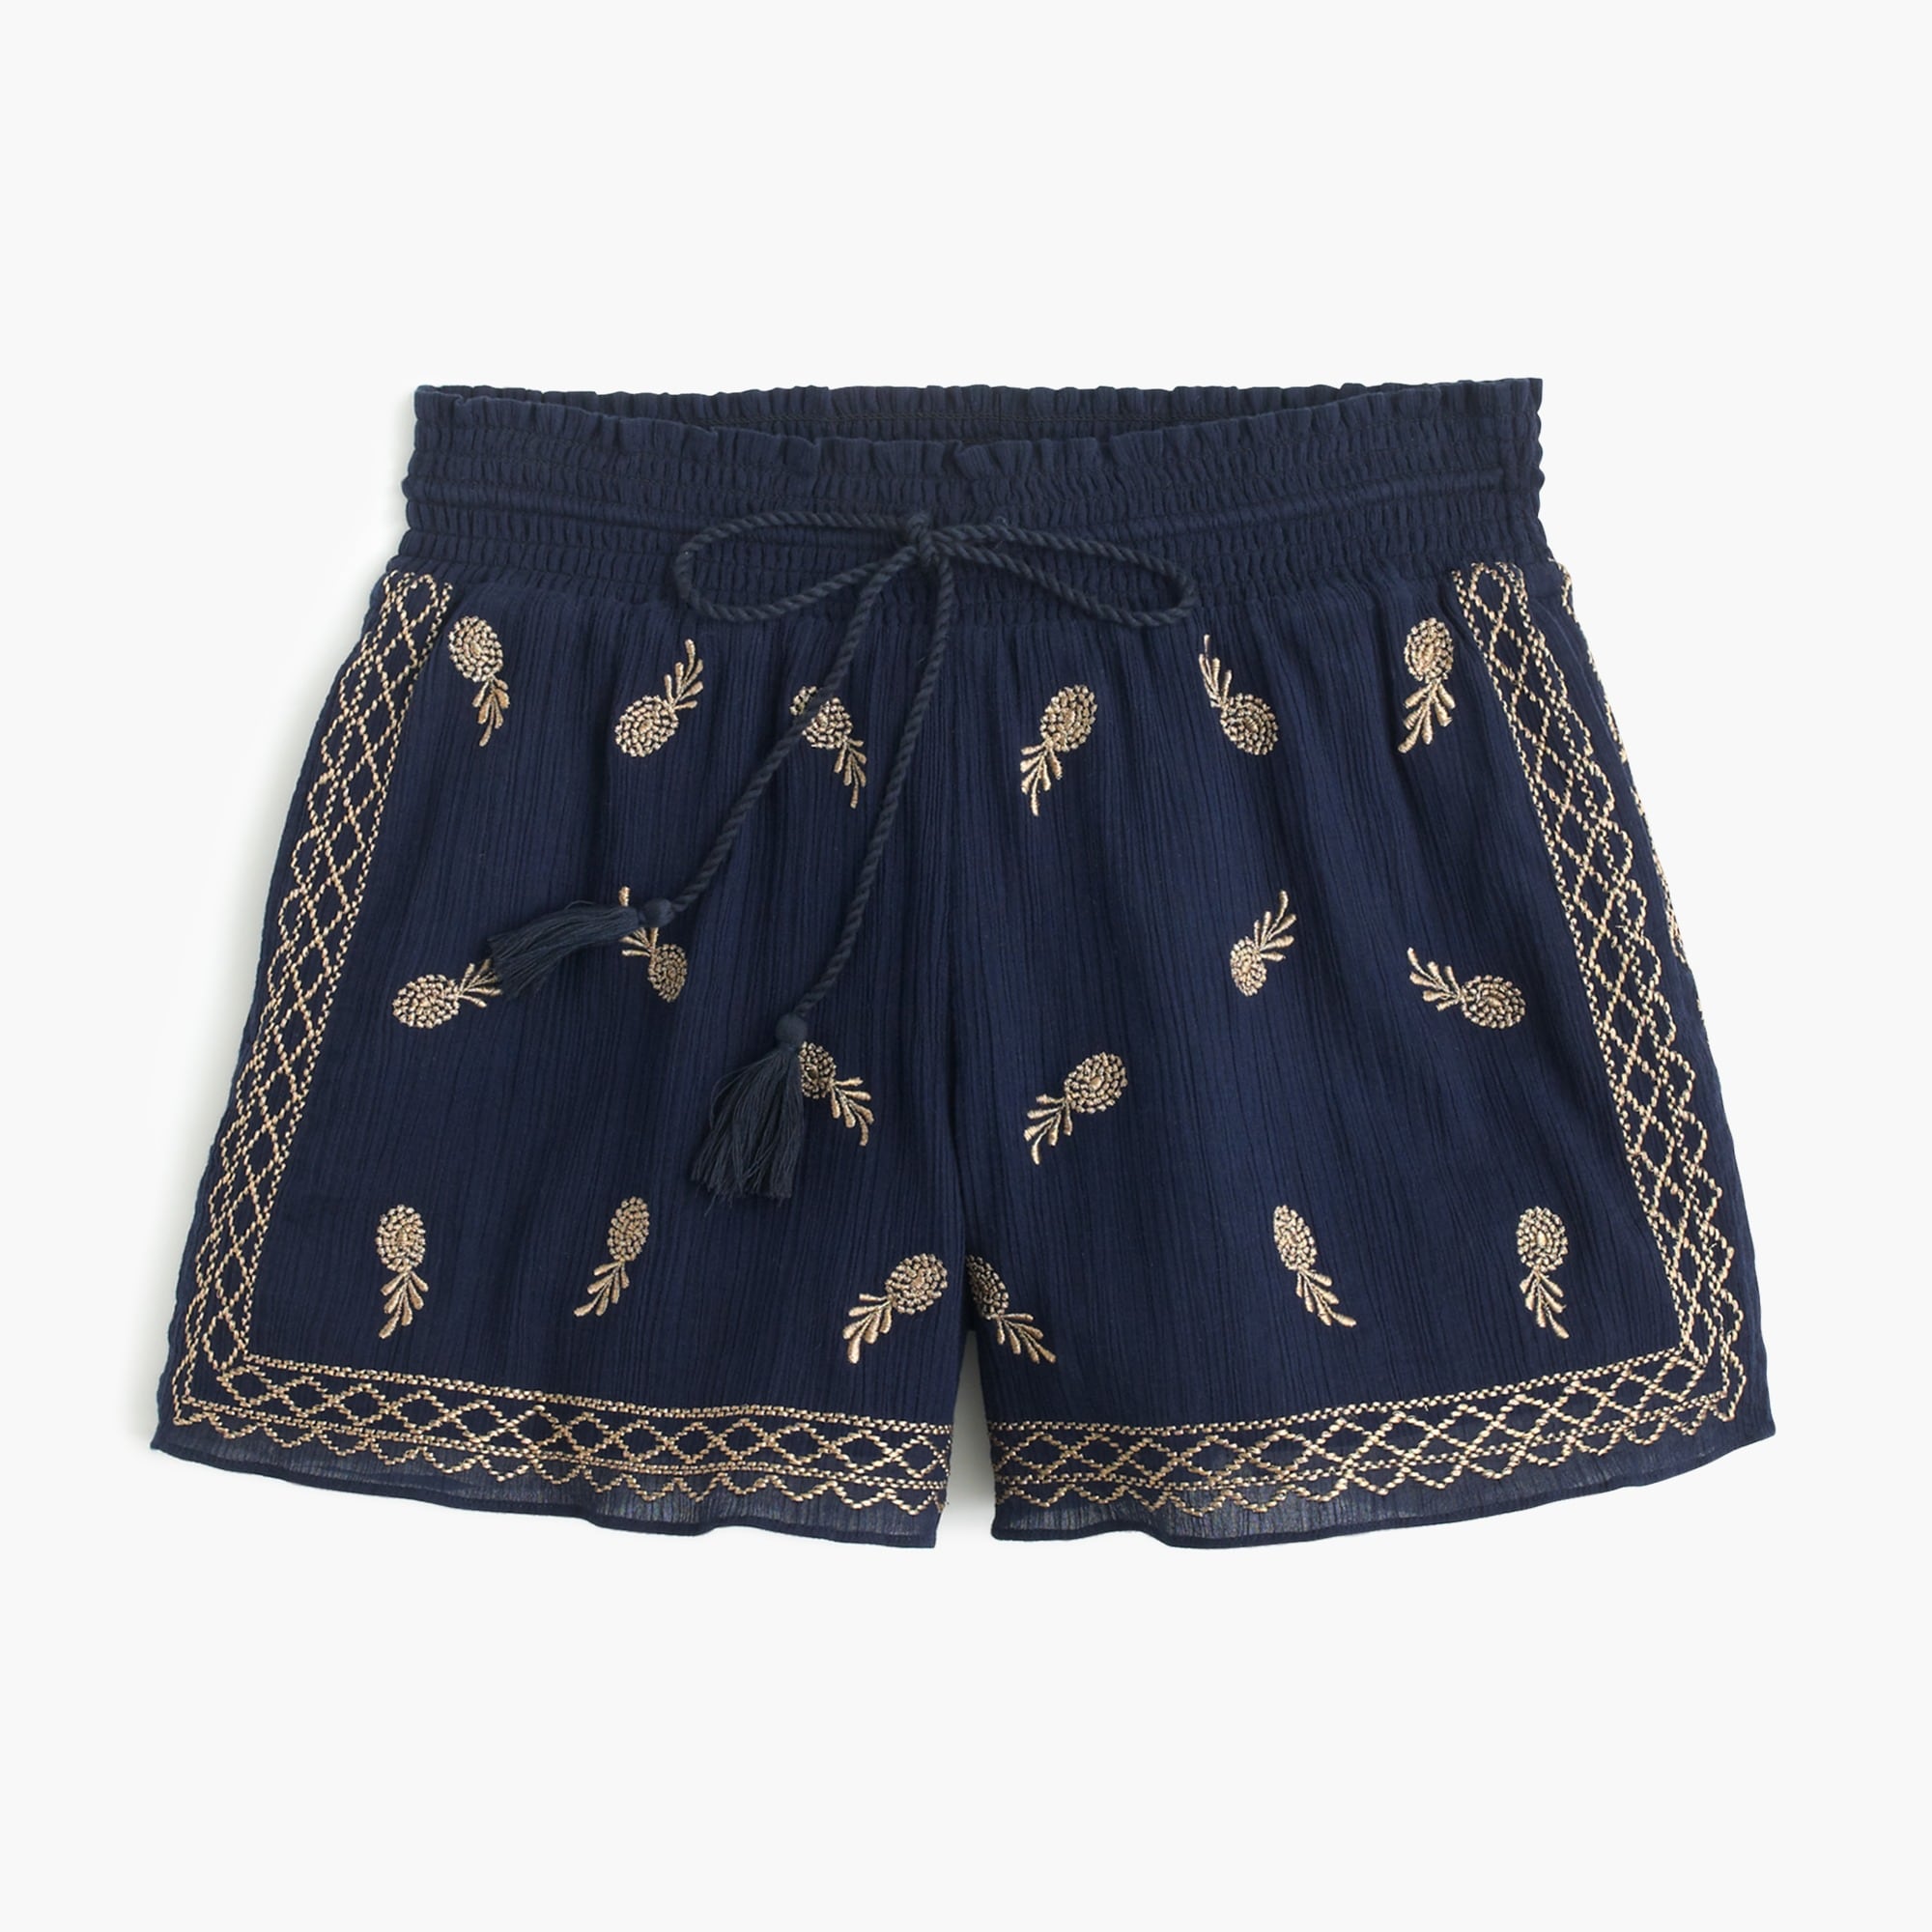 Embroidered short in gauzy cotton : Women shorts | J.Crew